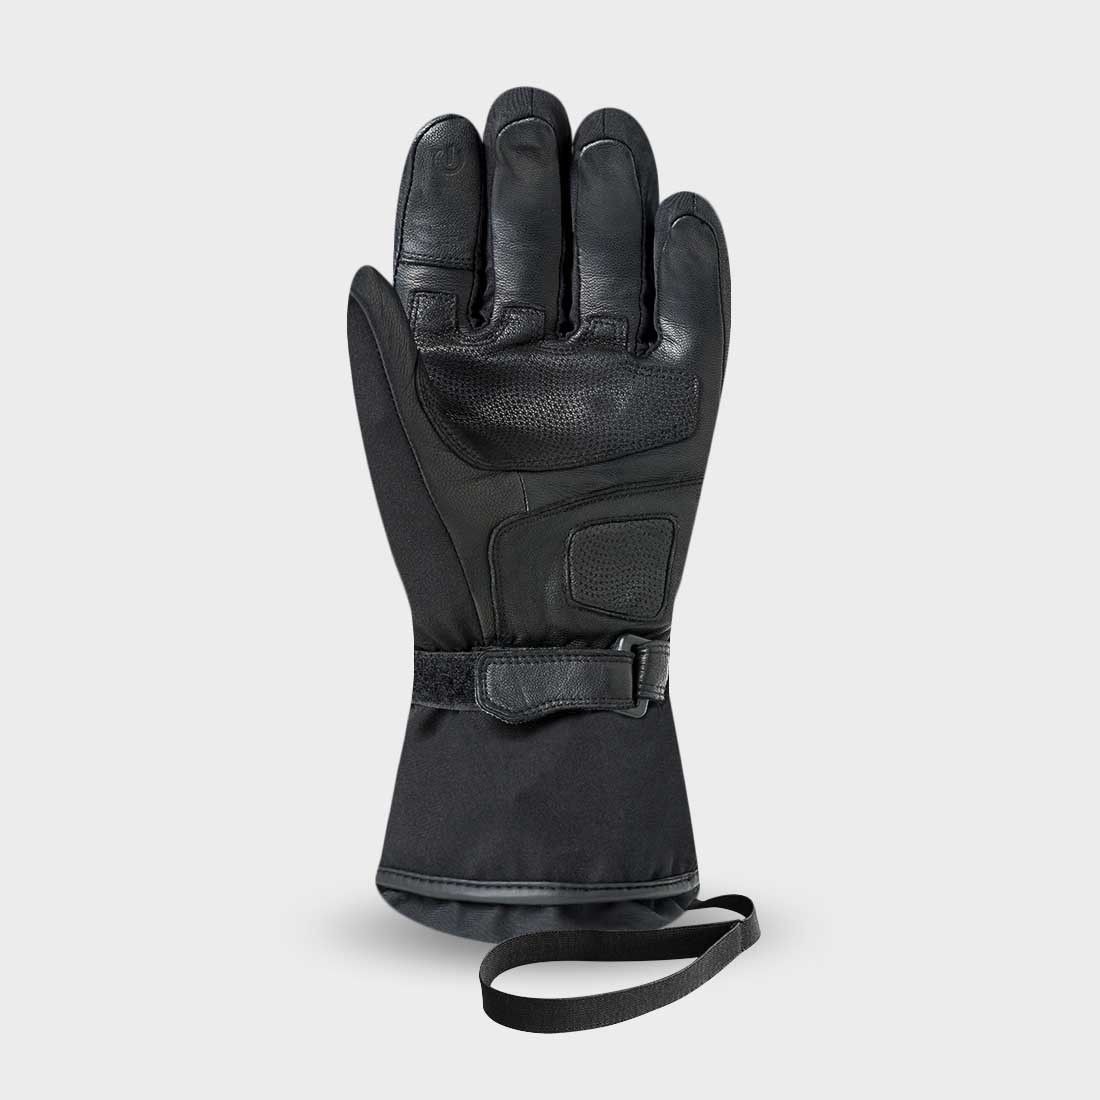 gloves CONNECTIC4, RACER (black)